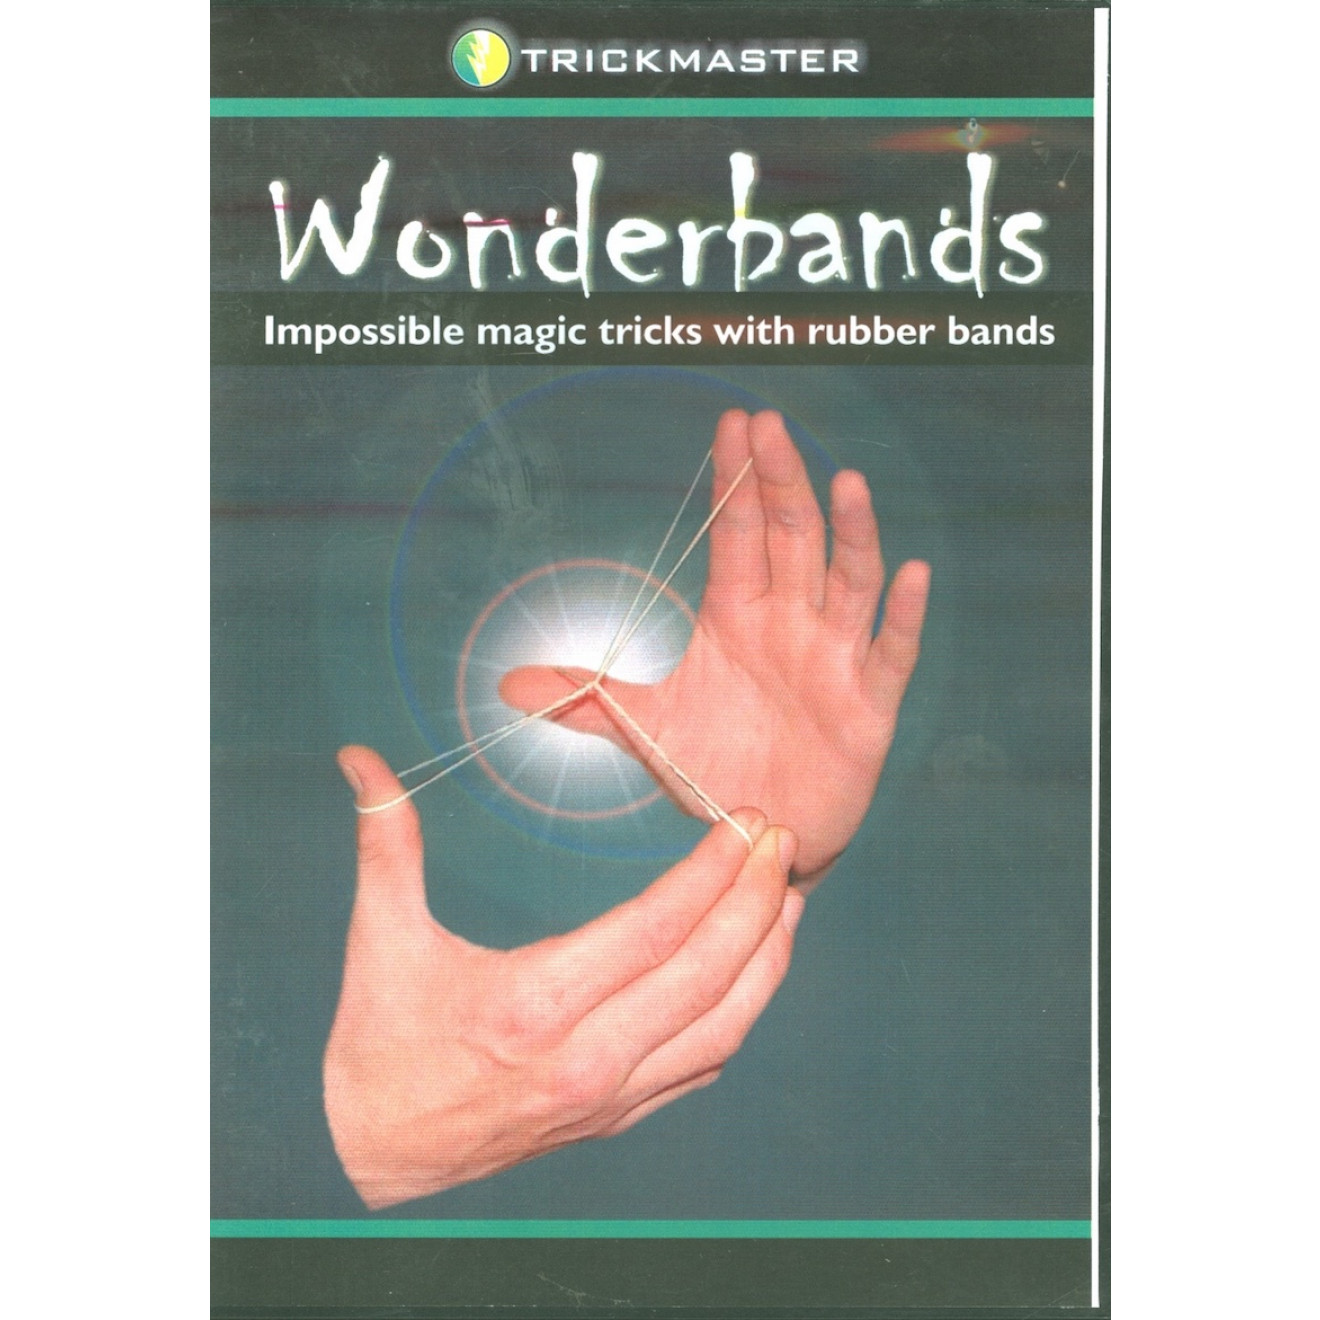 Wonderbands